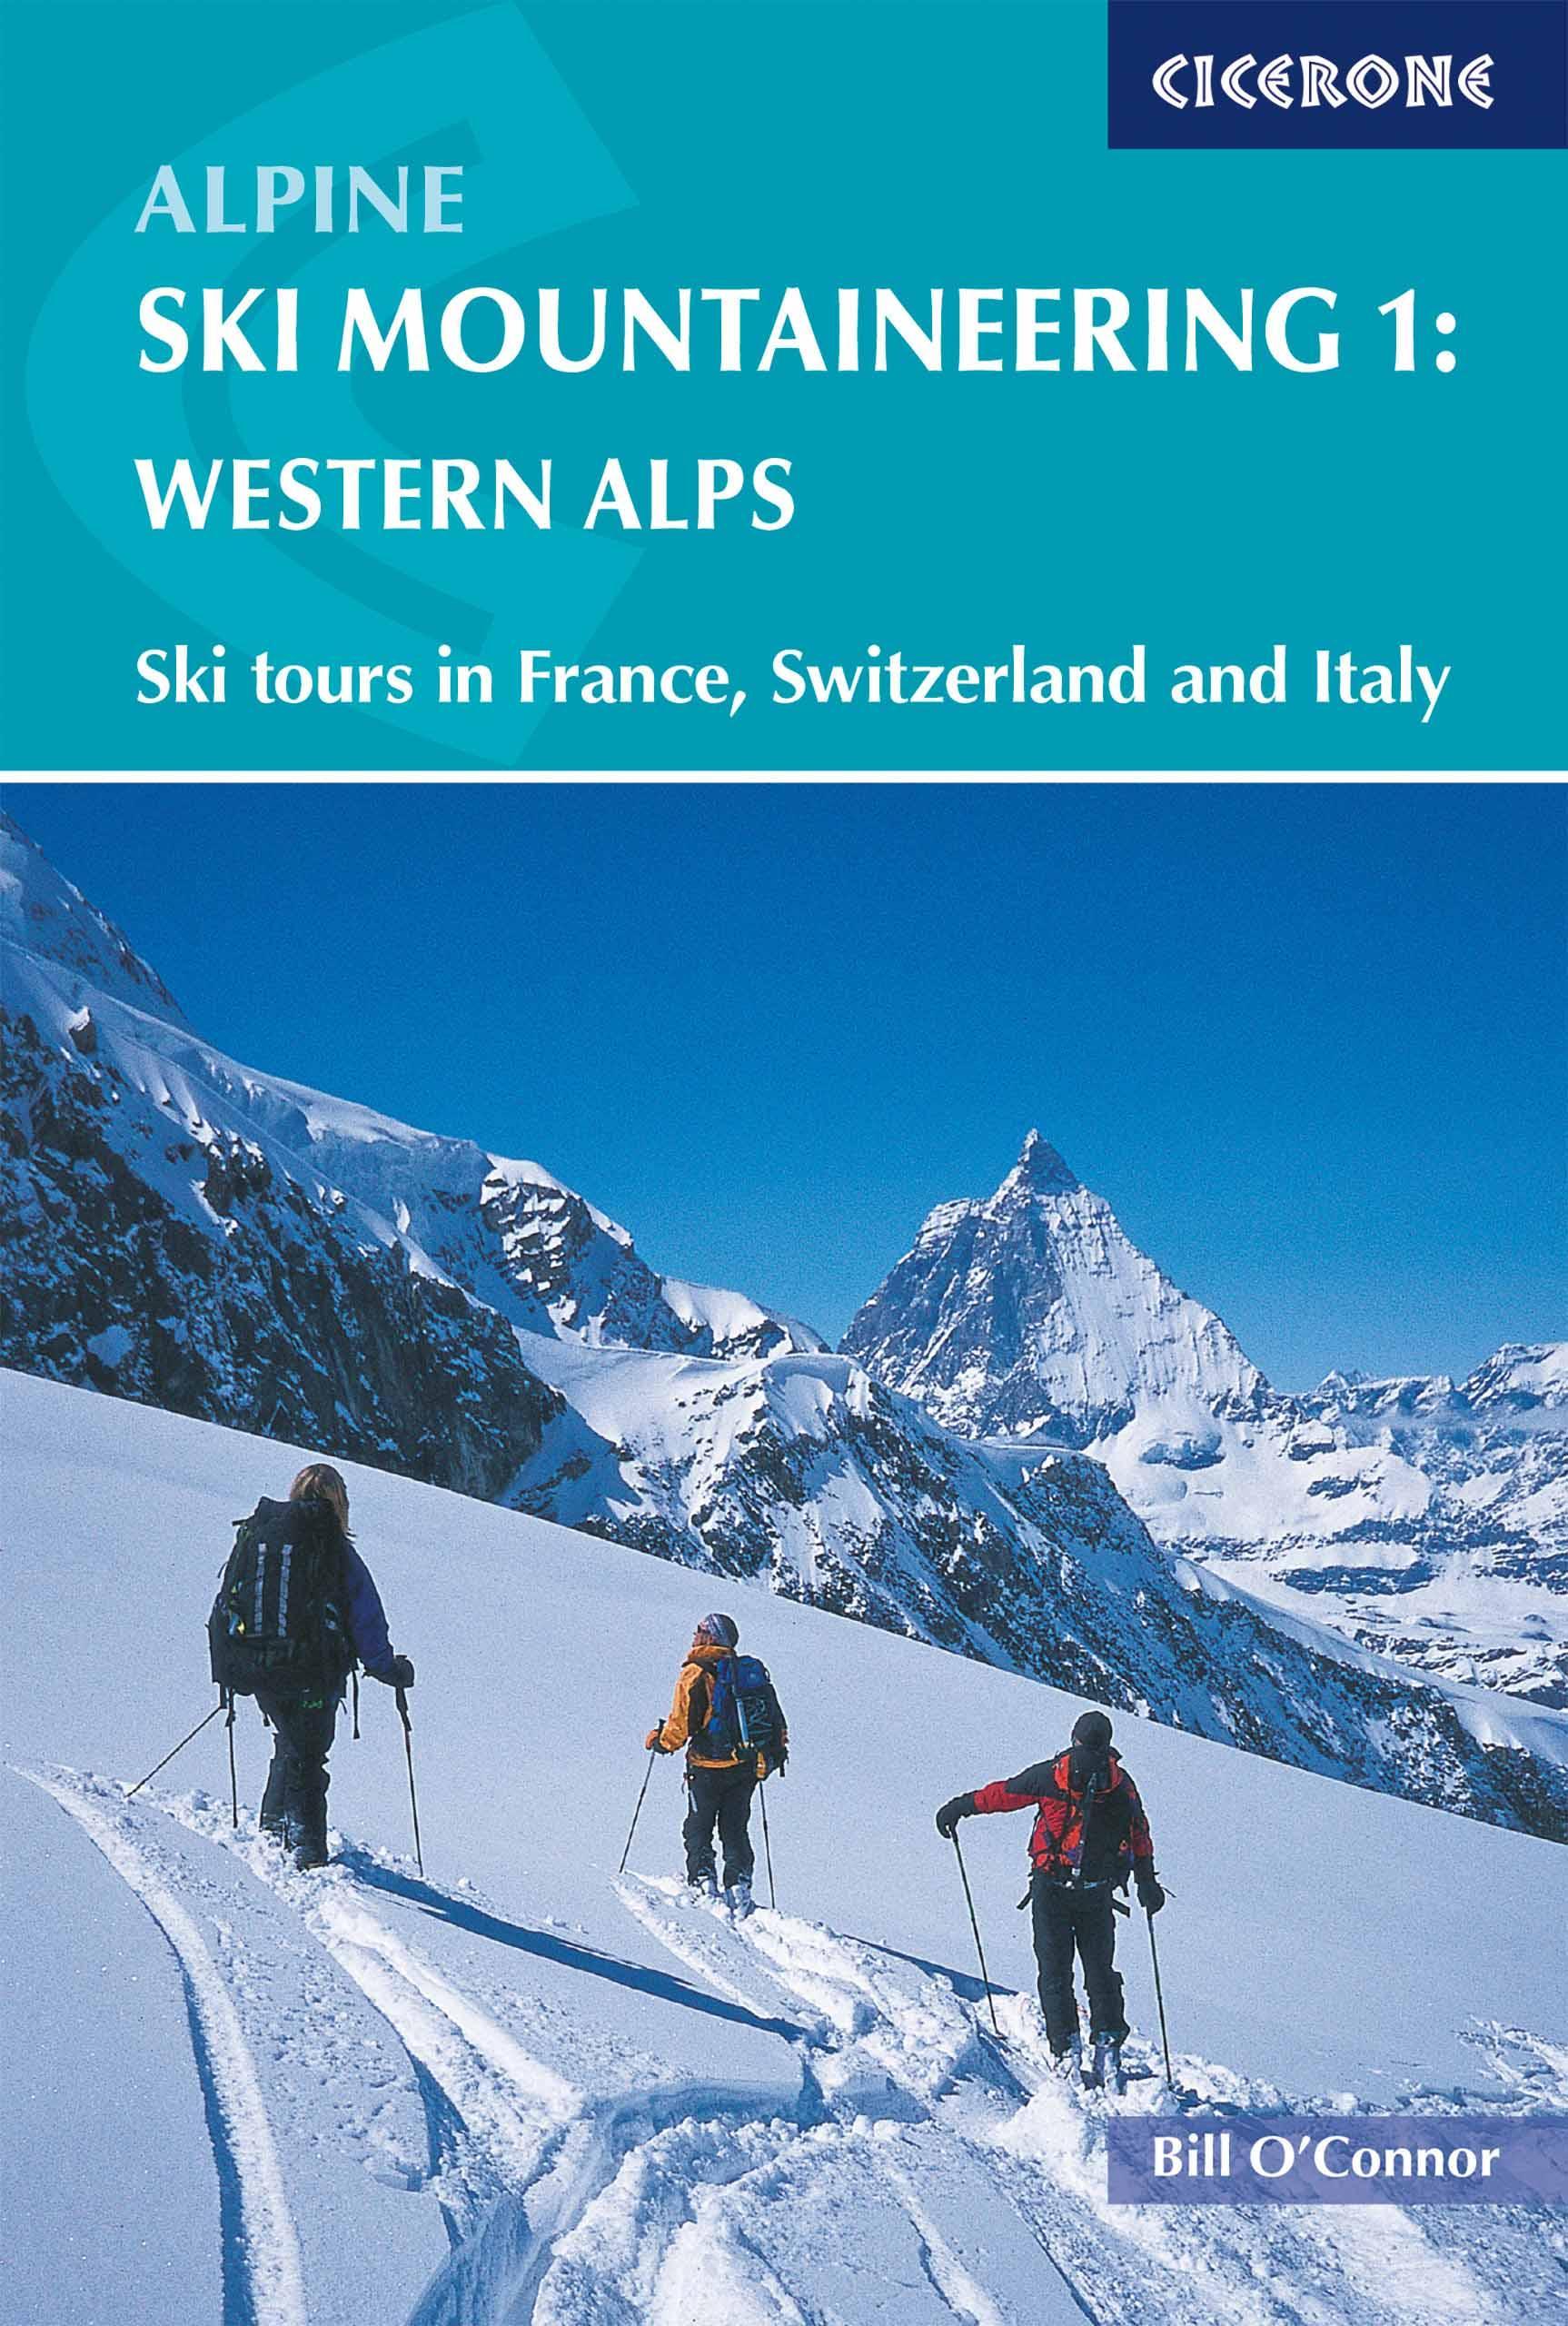 Alpine Ski Mountaineering Vol 1 - Western Alps - Bill O'Connor